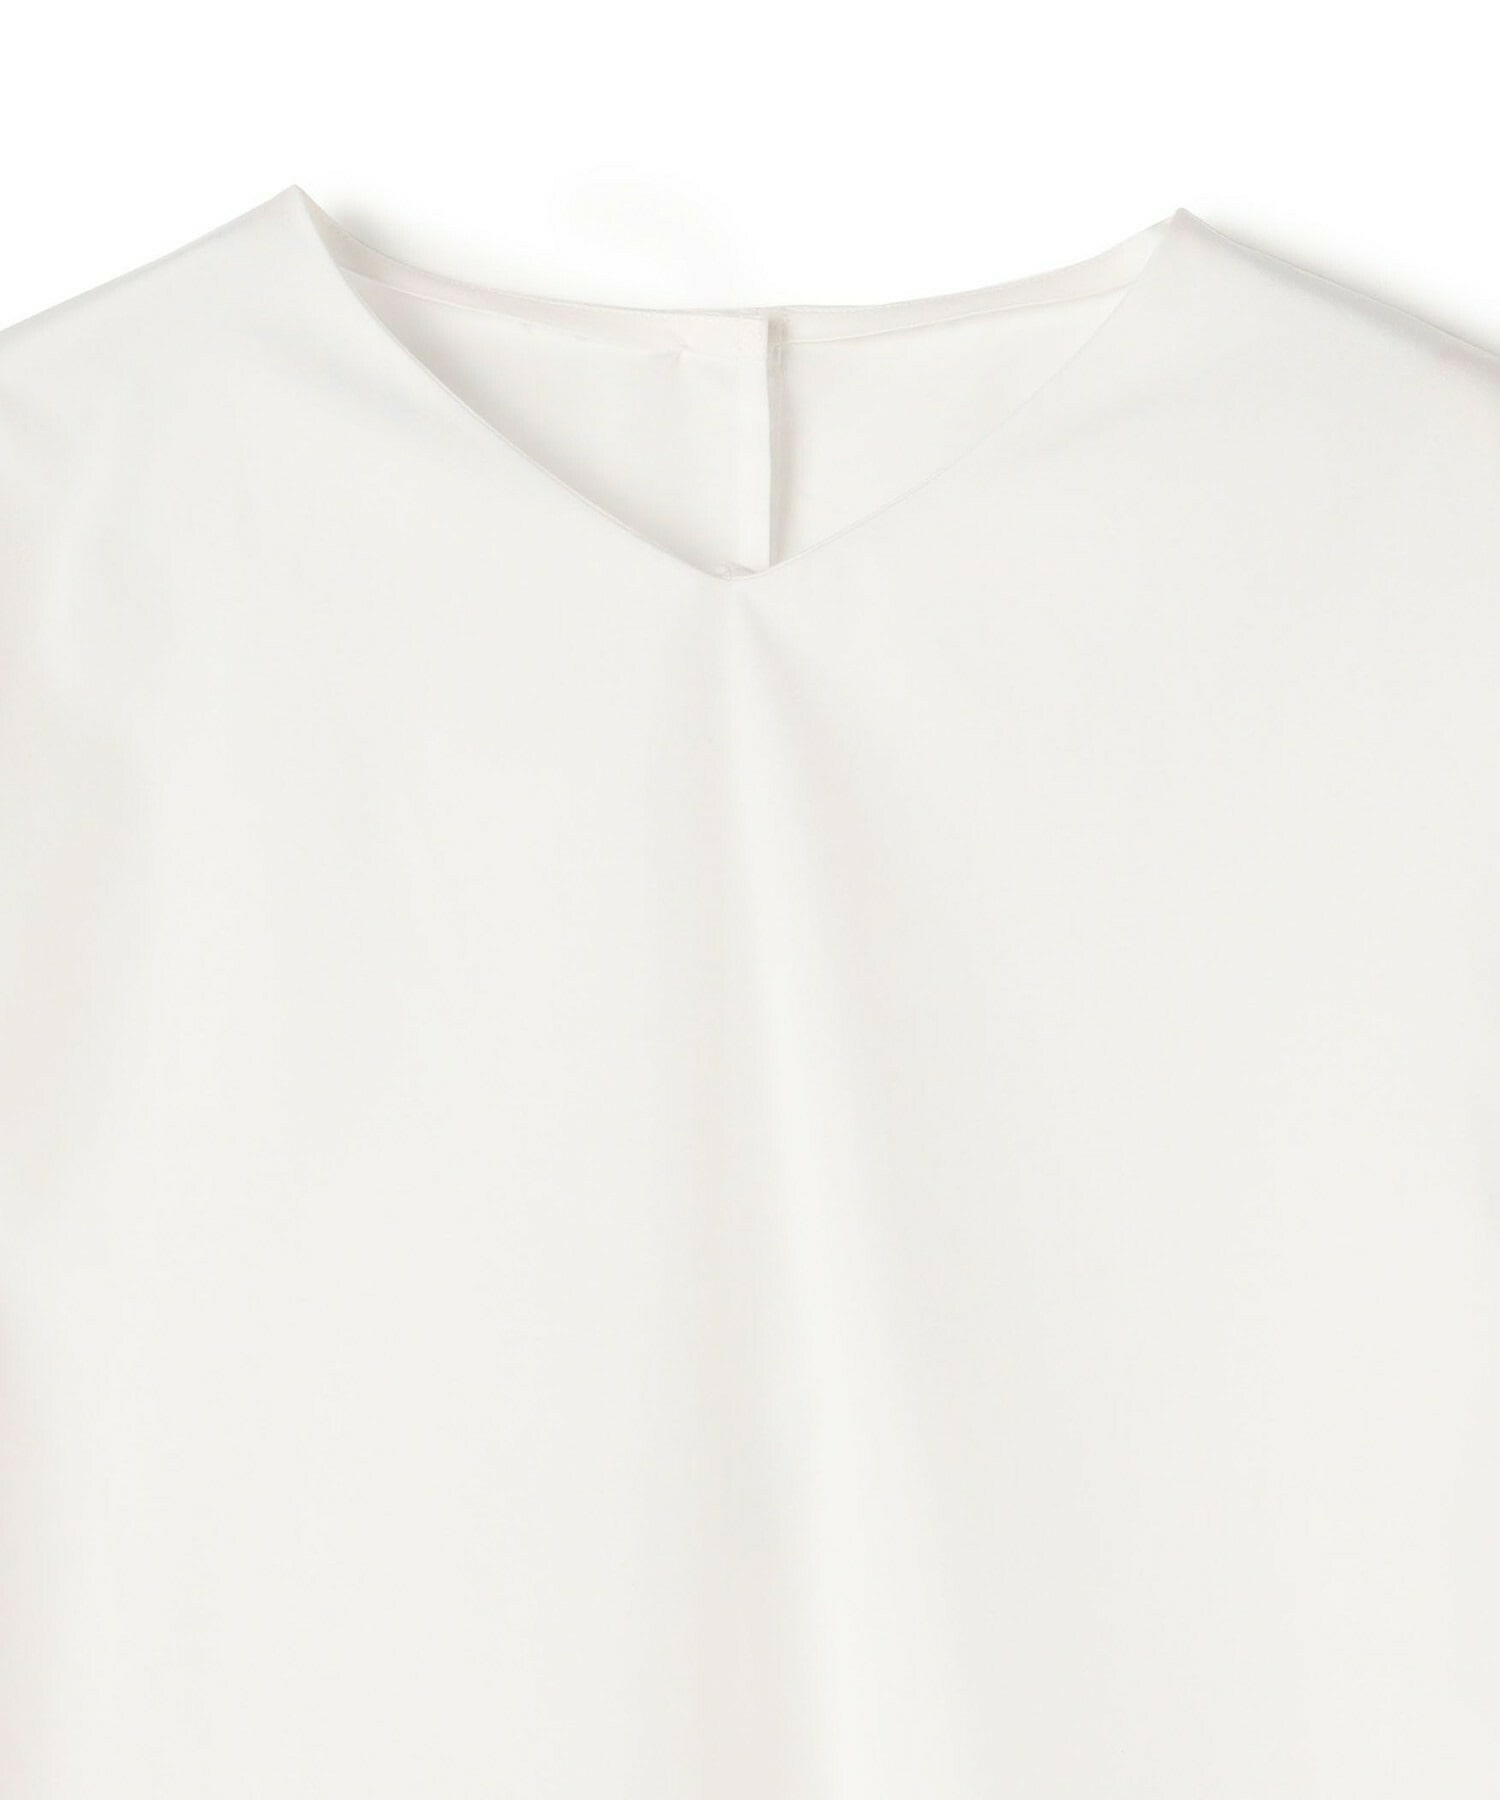 【yoshie inaba】コットンポプリンストレートシルエットシャツ 詳細画像 ホワイト 17